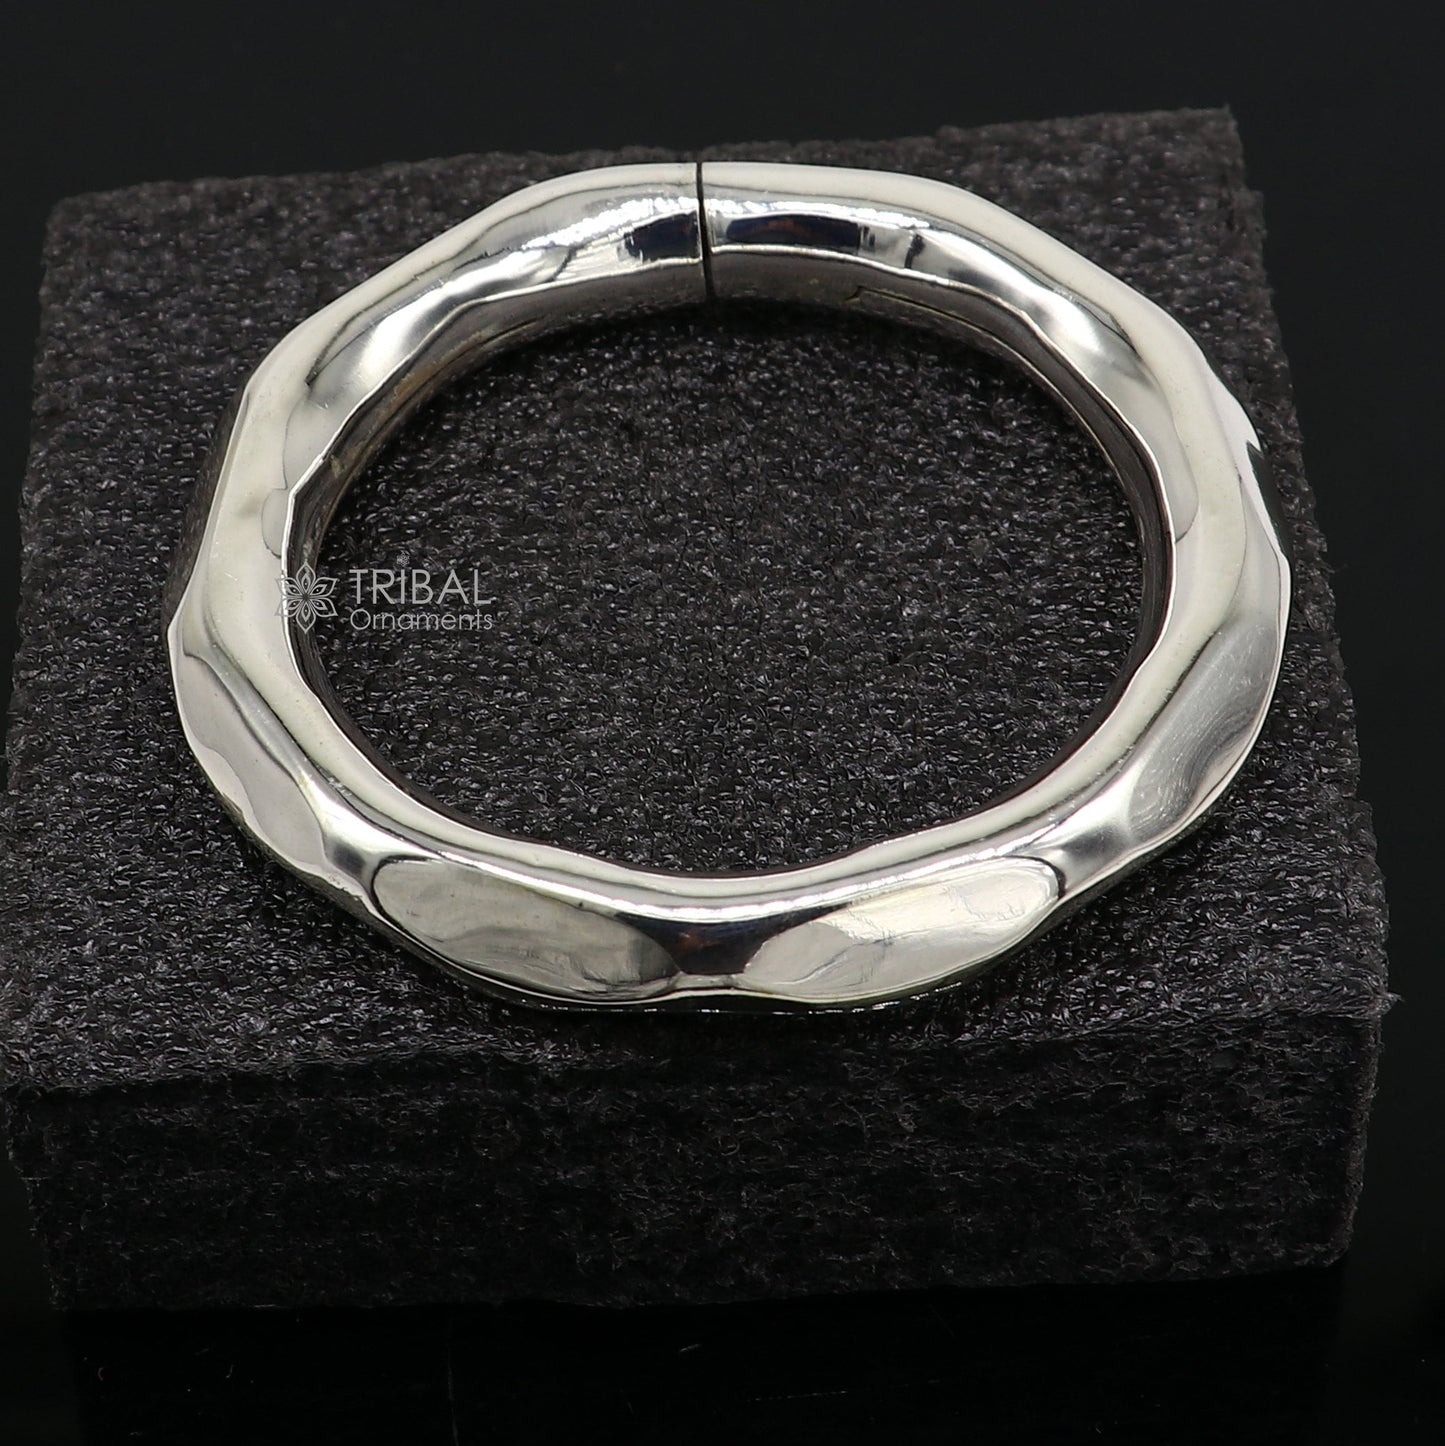 925 sterling silver plain shiny bright bangle bracelet kada, excellent gifting stylish fancy bangle men's or girls kada jewelry nsk746 - TRIBAL ORNAMENTS